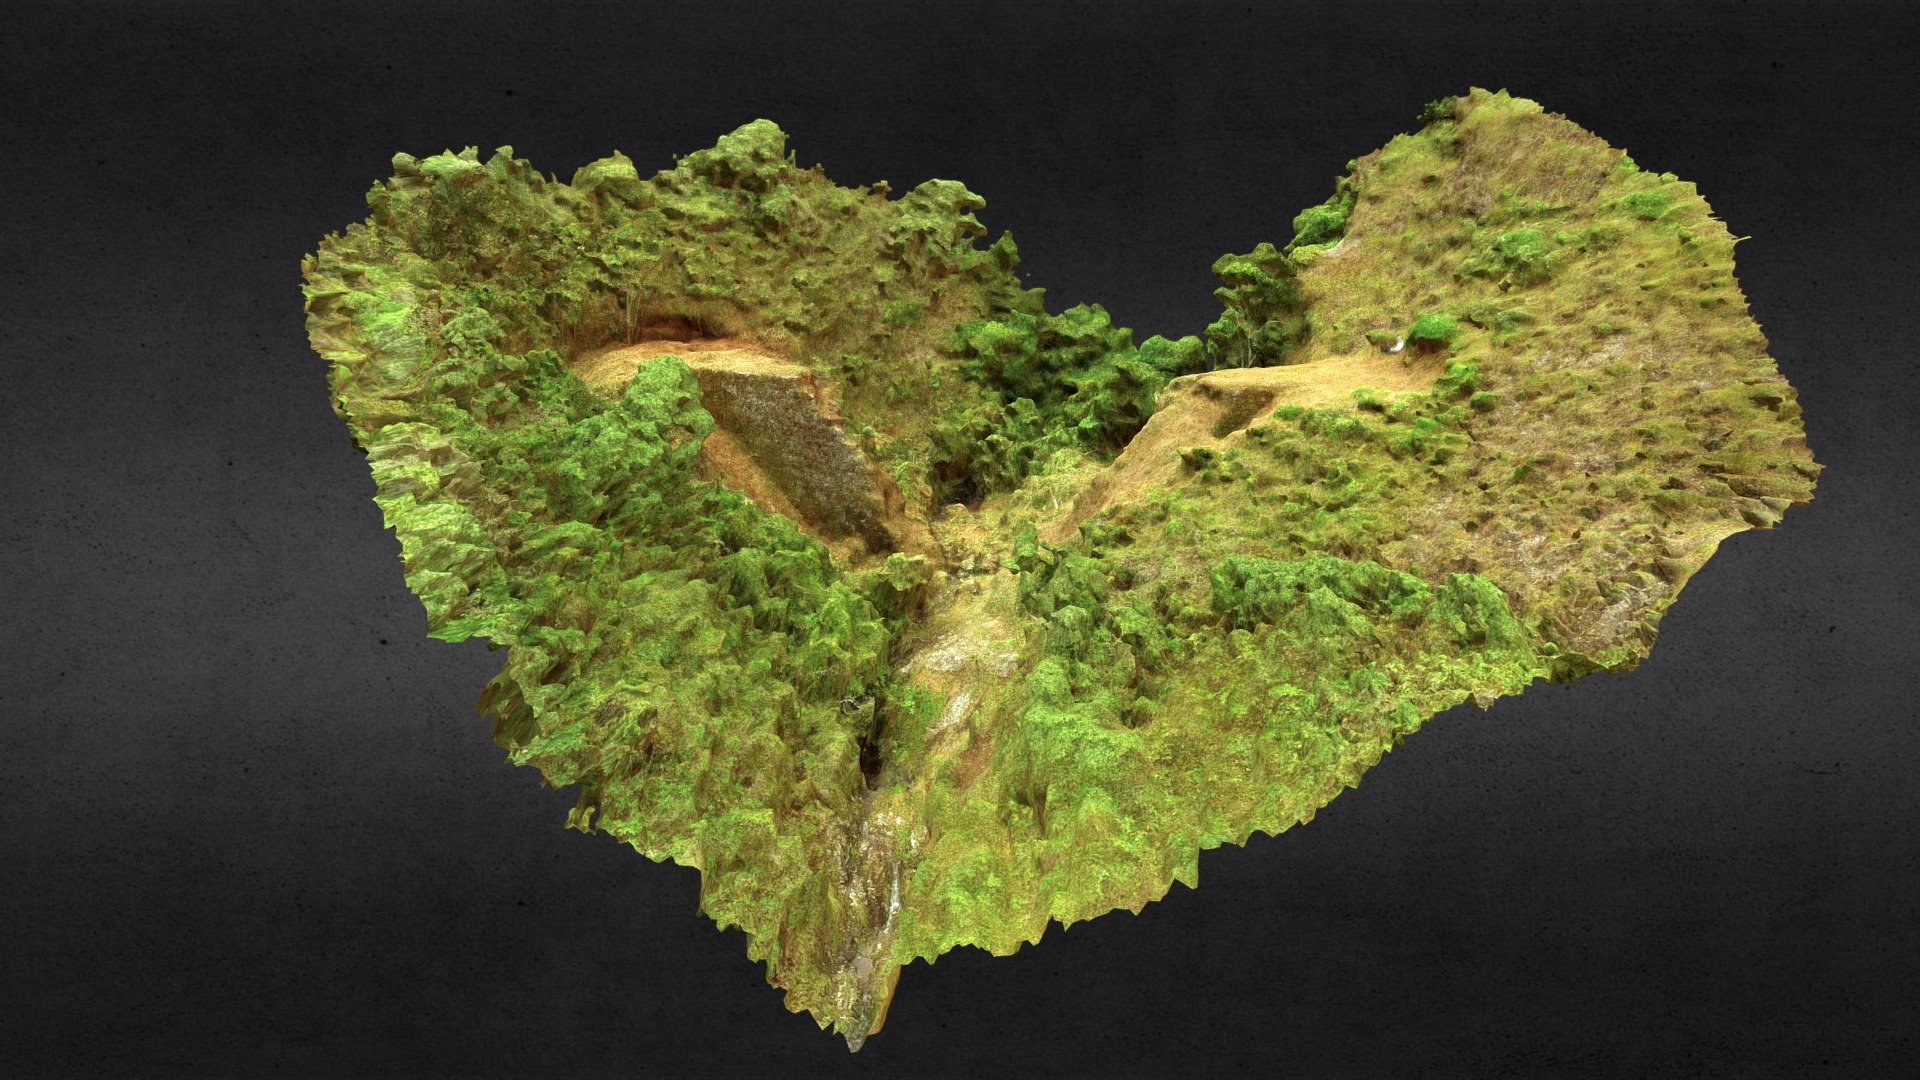 3D model Barragem da Lagoa da Prata - This is a 3D model of the Barragem da Lagoa da Prata. The 3D model is about a green and brown rock formation.